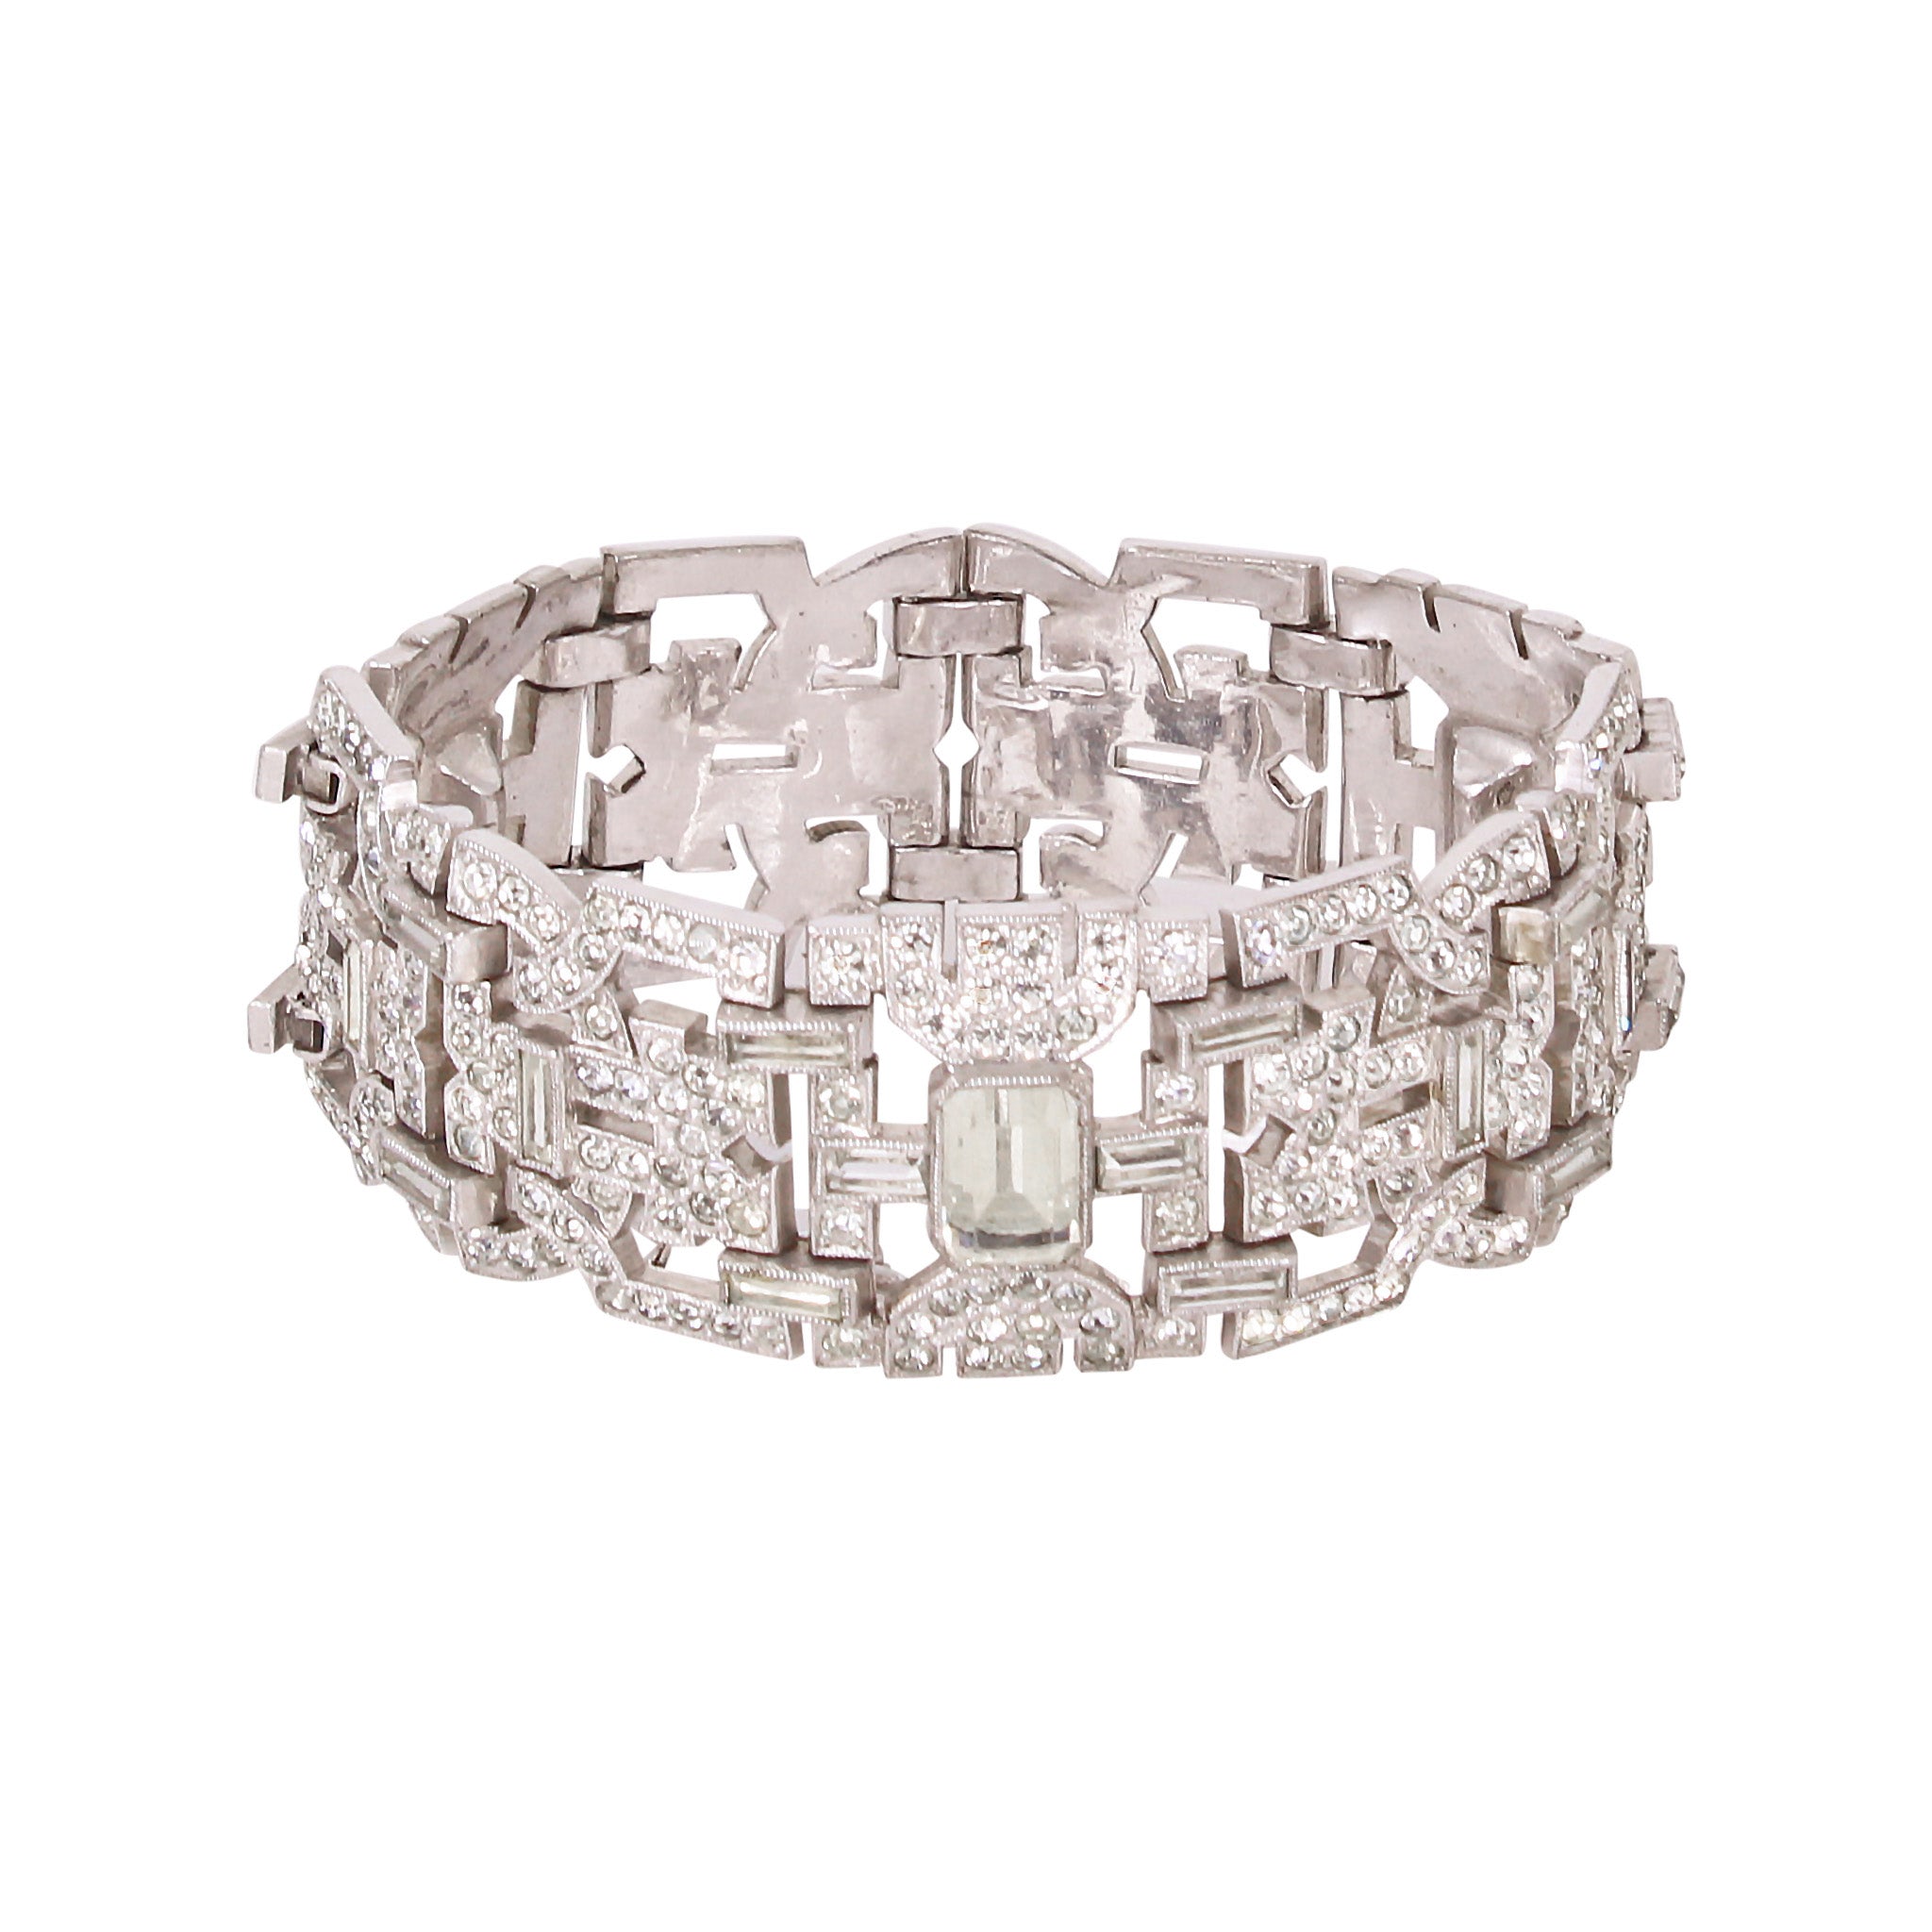 Sensational Art Deco Rhinestone Bracelet – The Vintage Jewel